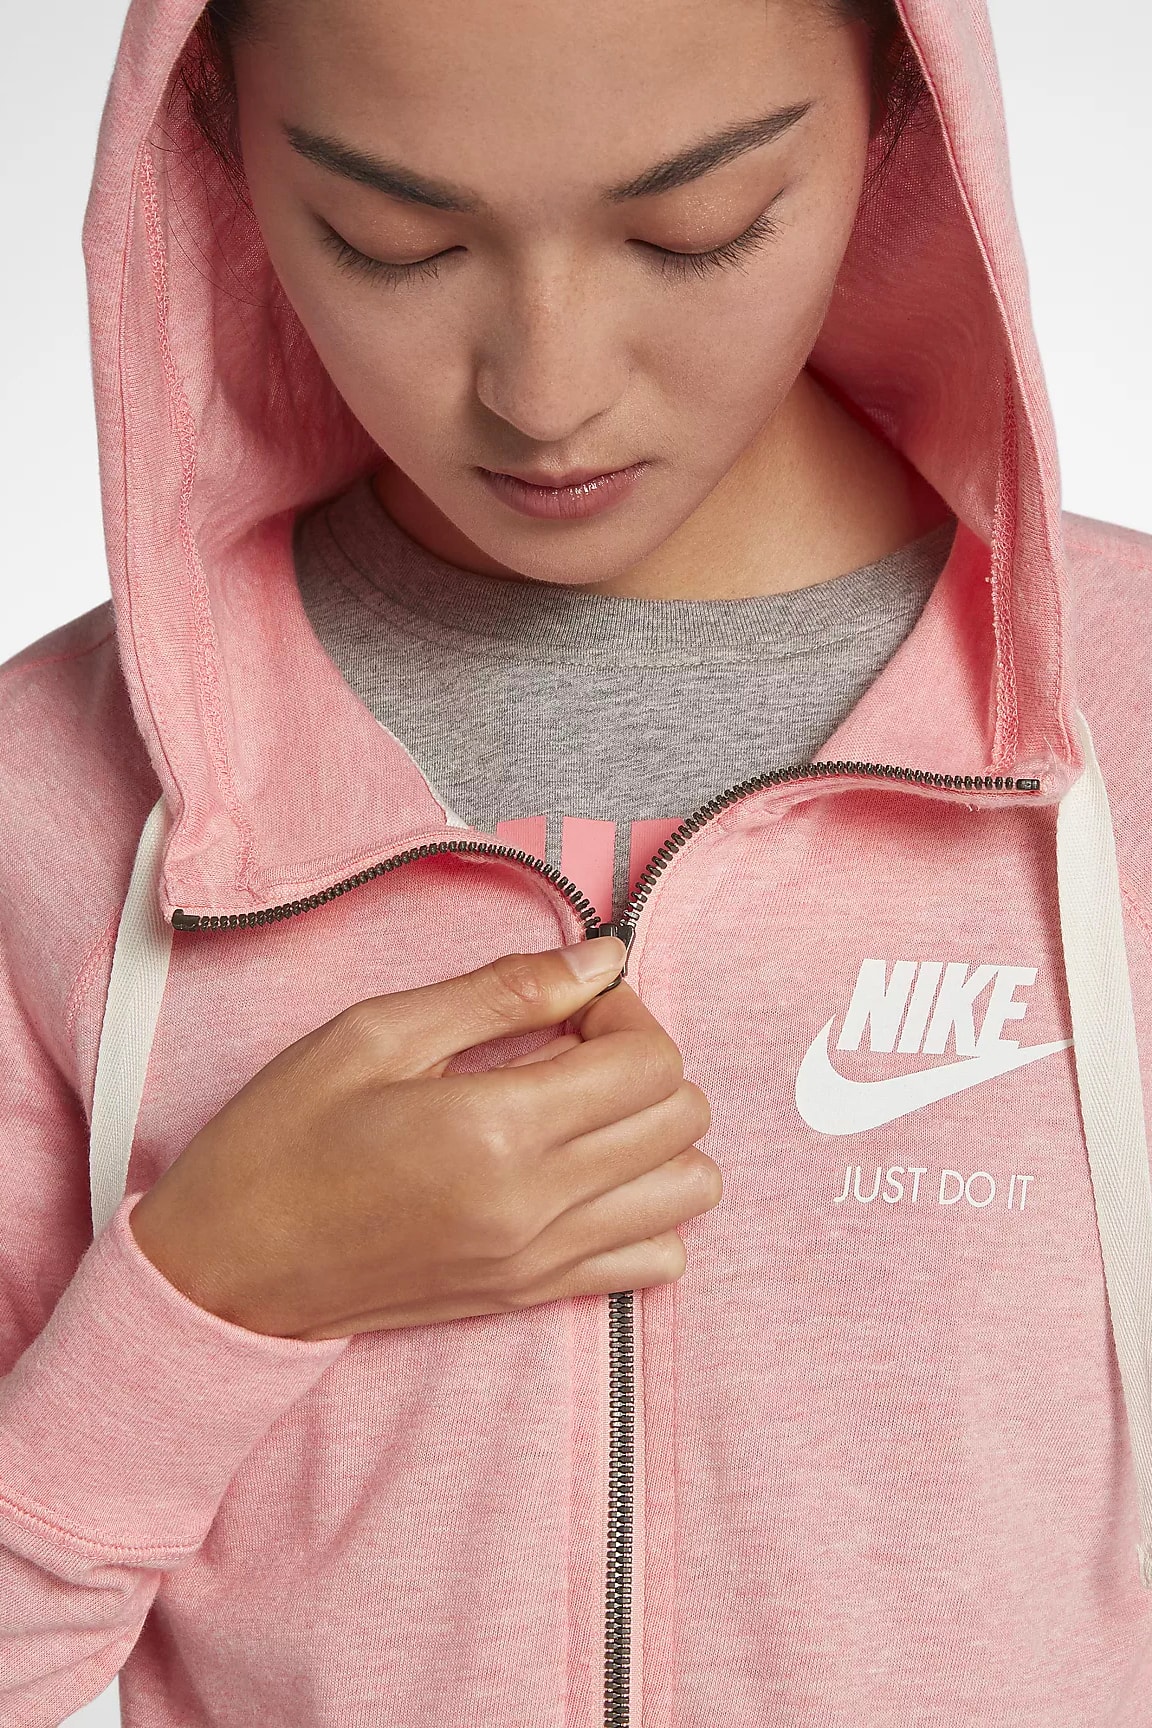 Nike Sportswear Gym Vintage Pink Full Zip Up Hoodie Spring Summer 2018 Pastel Millennial Bleached Coral Sail Price Release Where to Buy Online Store Website Women